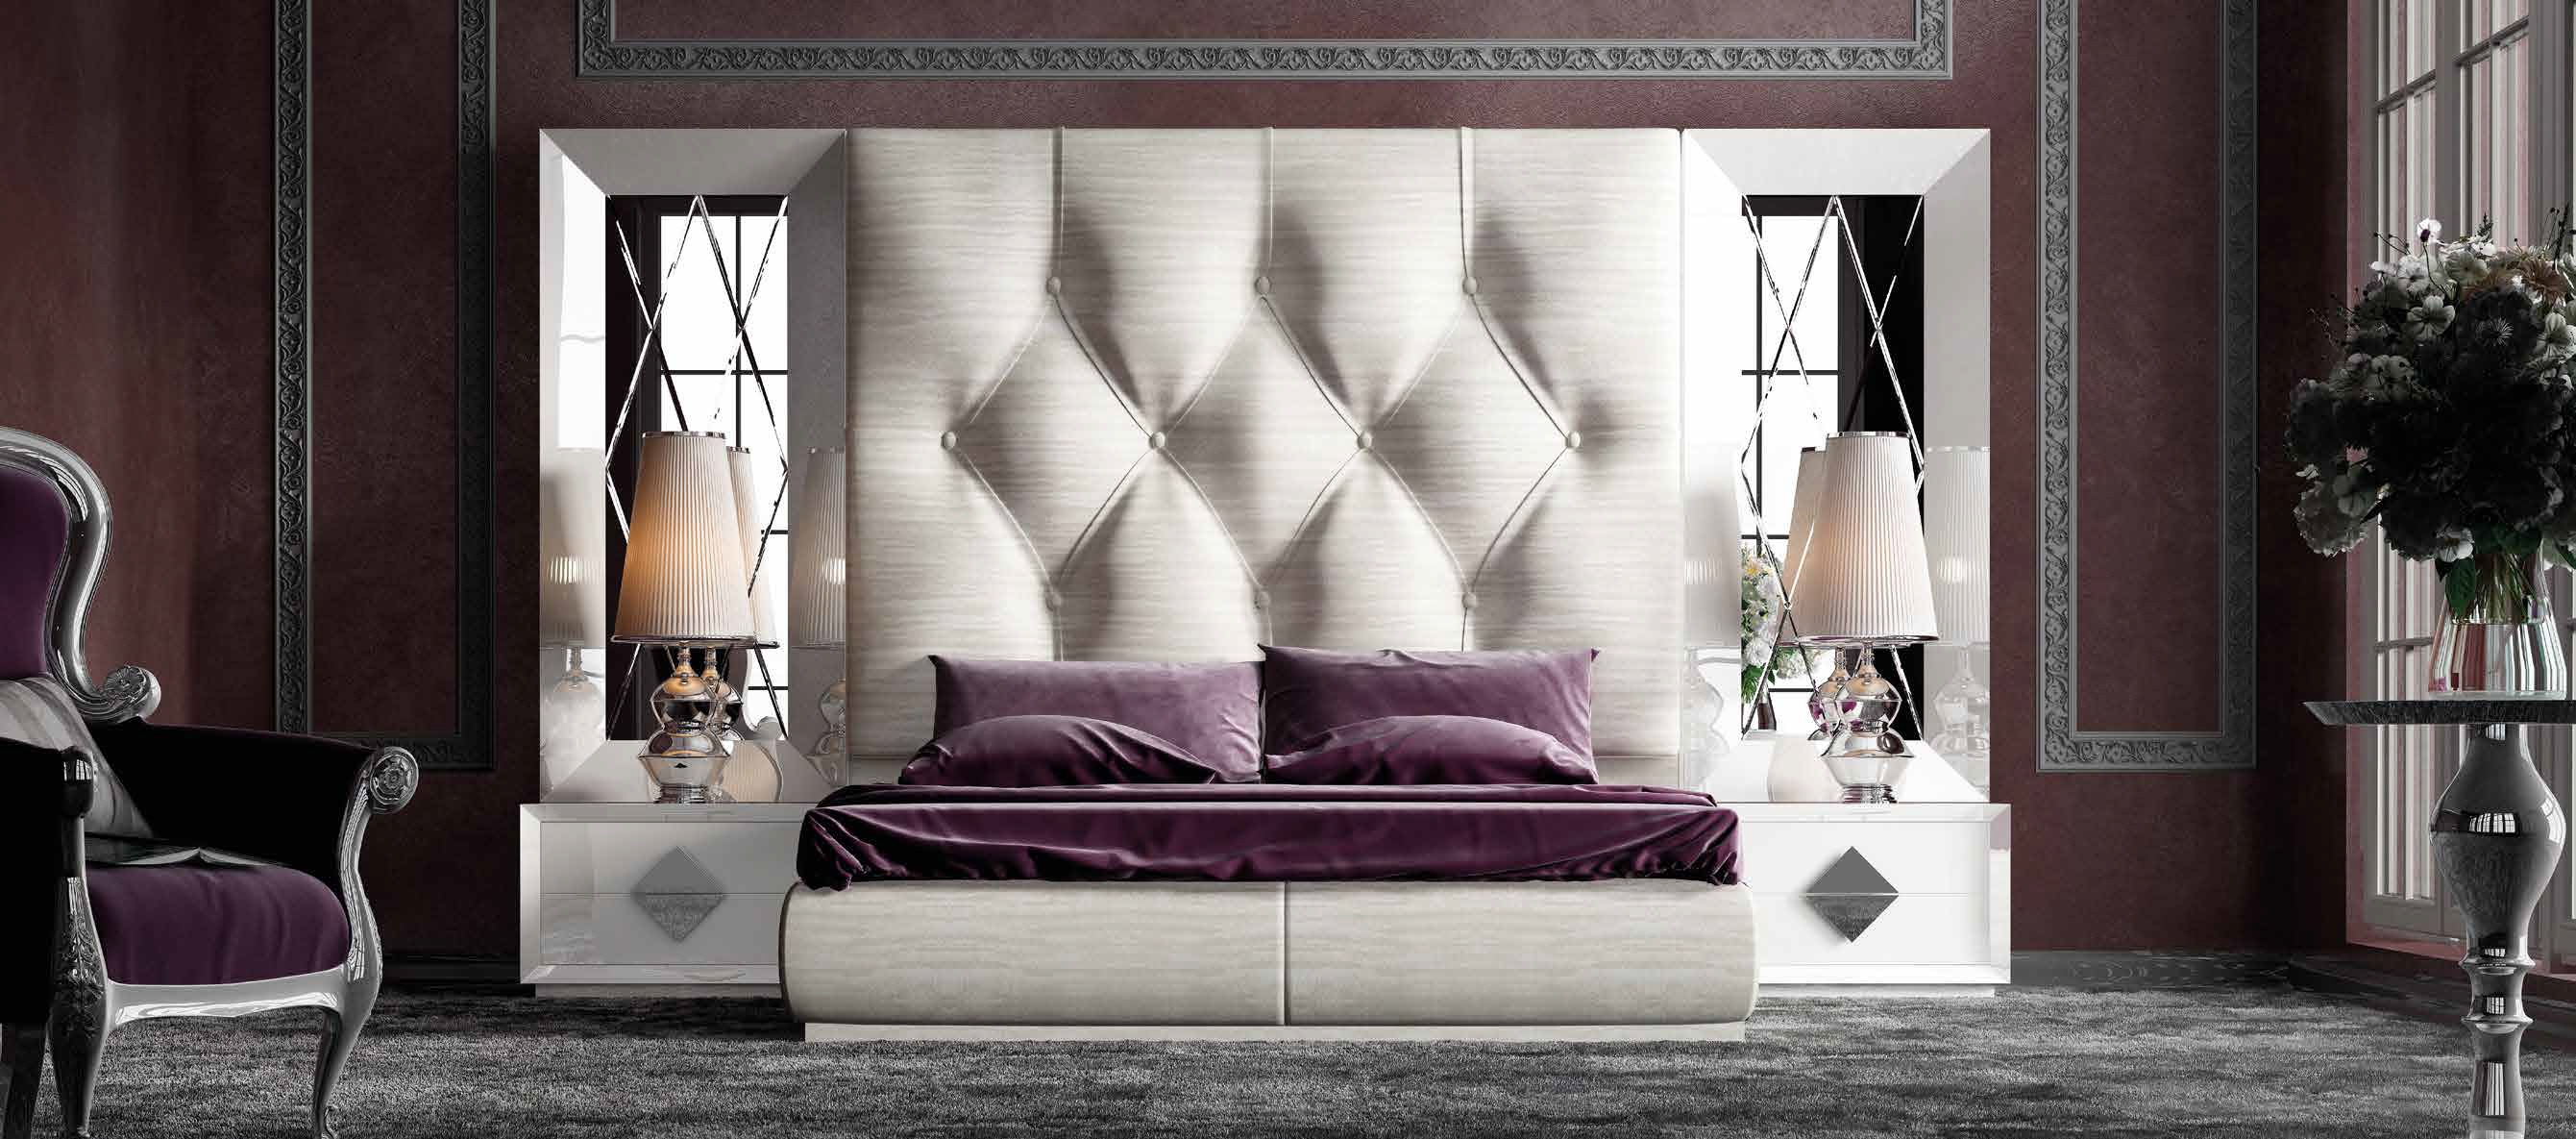 Brands Franco Furniture Bedrooms vol2, Spain DOR 78